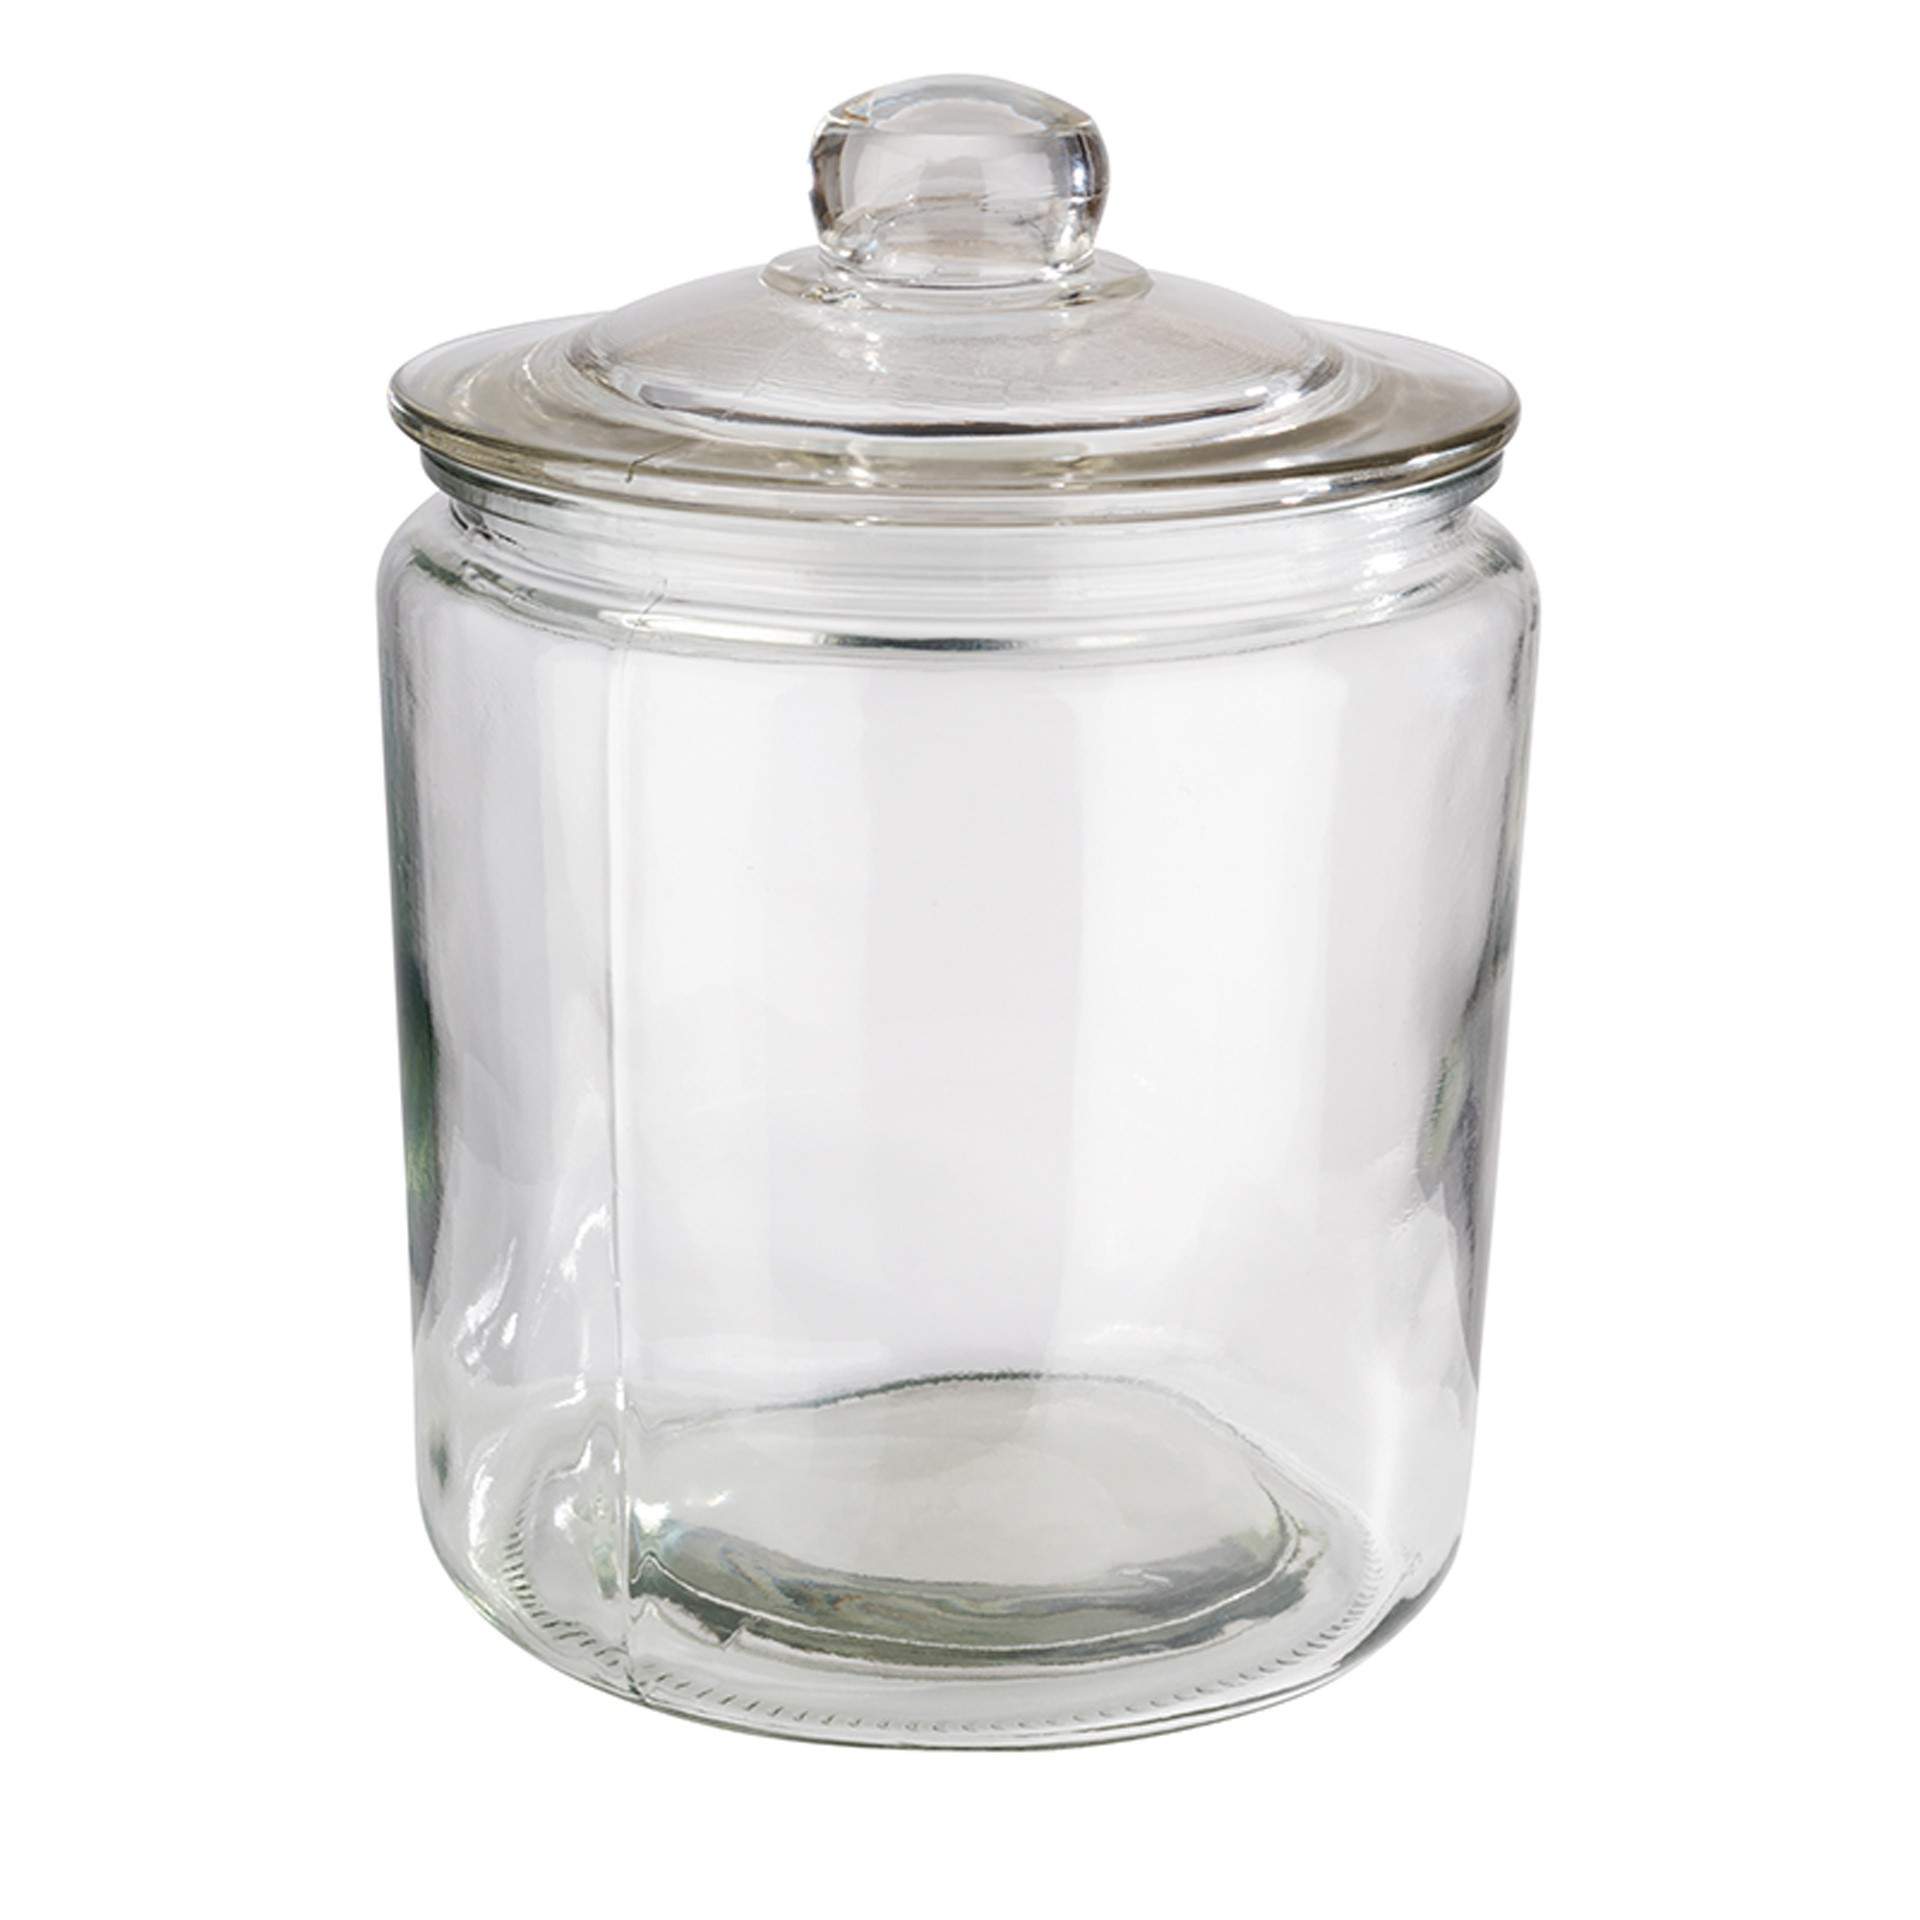 Vorratsglas - transparent - rund - Abm. 26 cm - Ø 18 cm - Inhalt 4,0 l - Glas - 82252-B